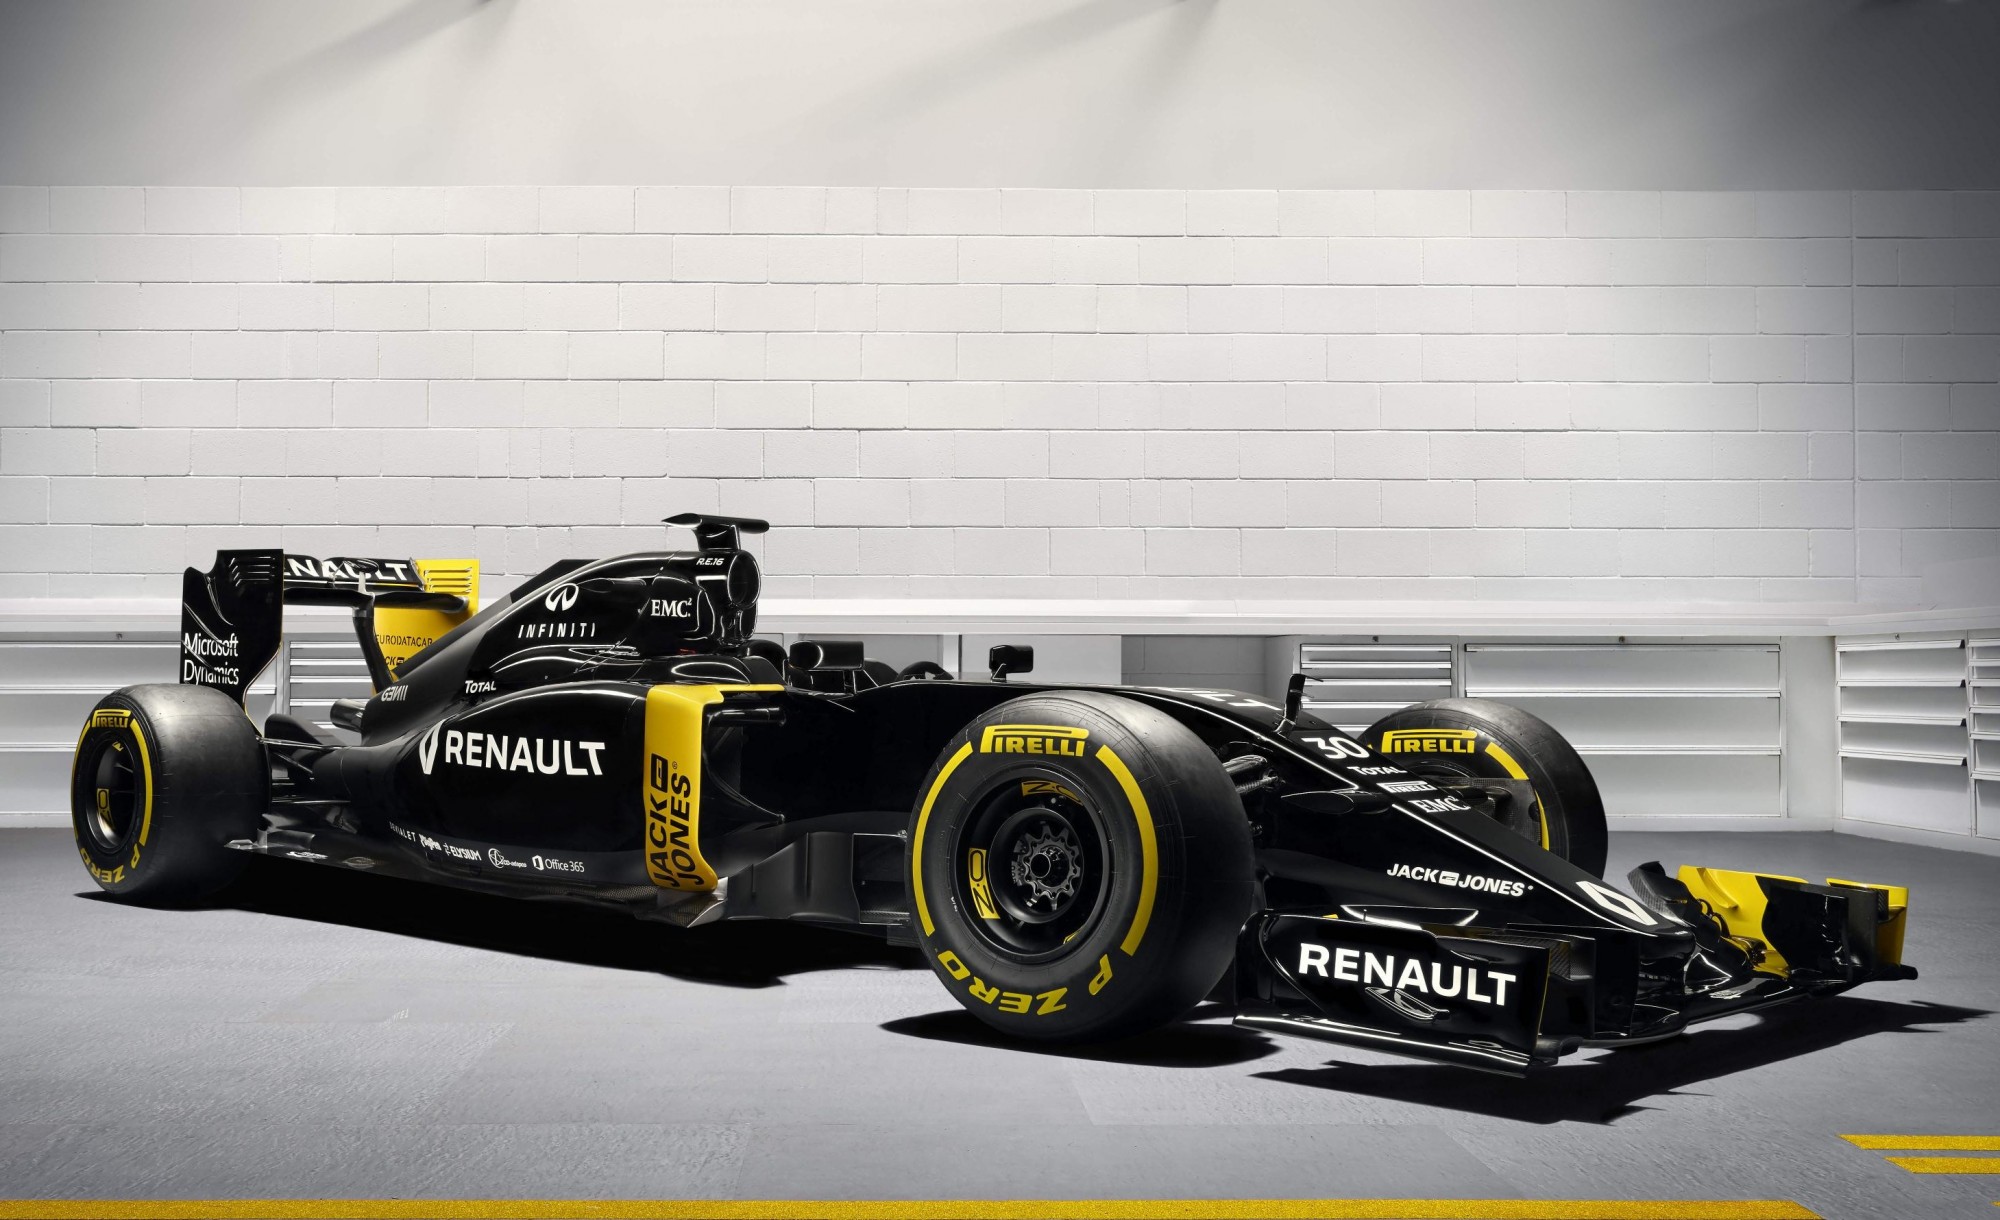 Renault_F1_RE16___Front_3Q___8k